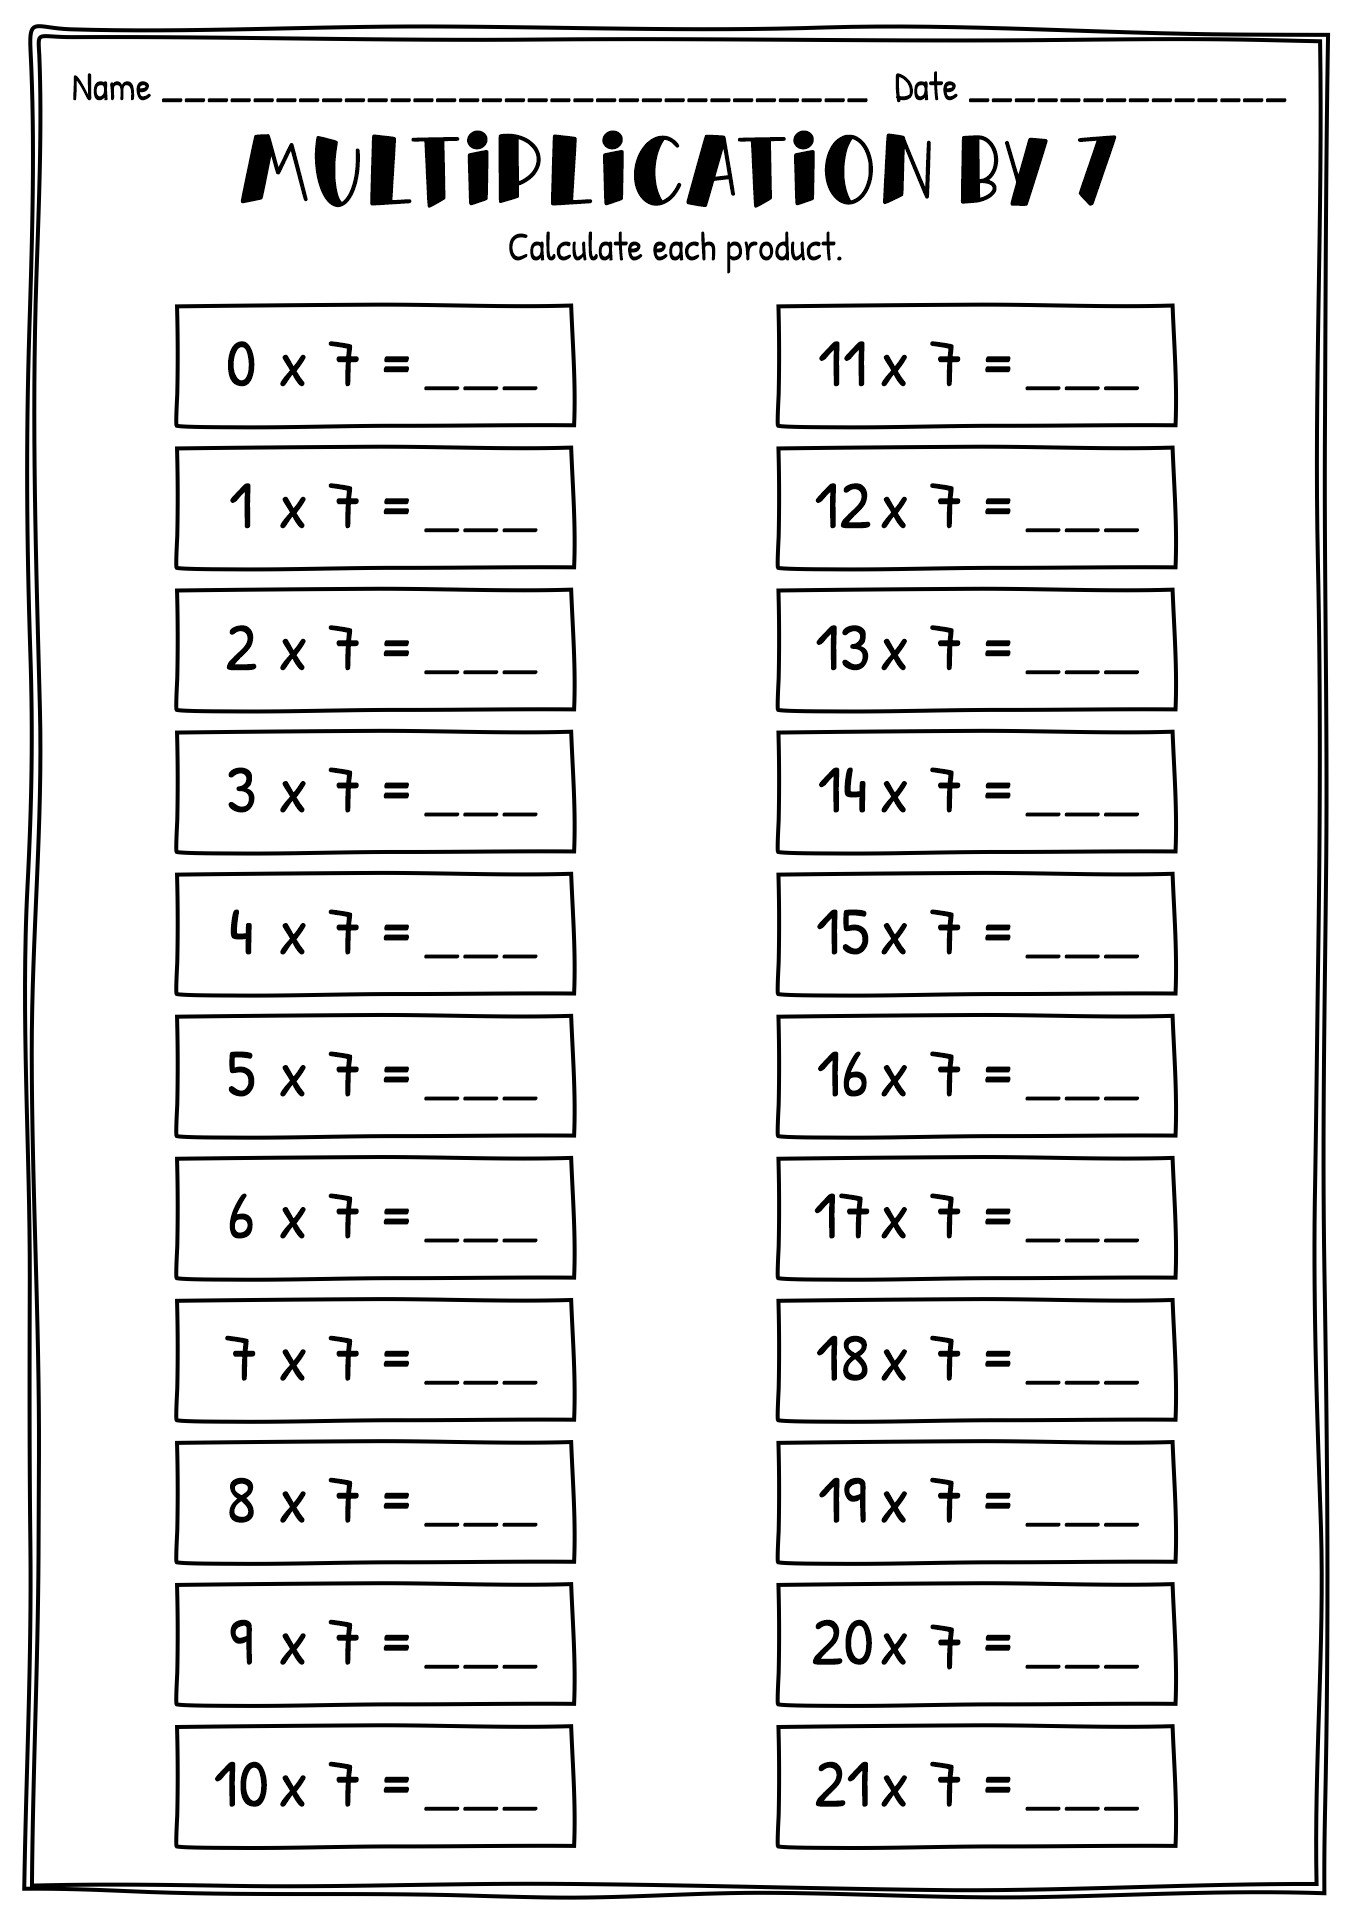 Multiplication by 7s Worksheet